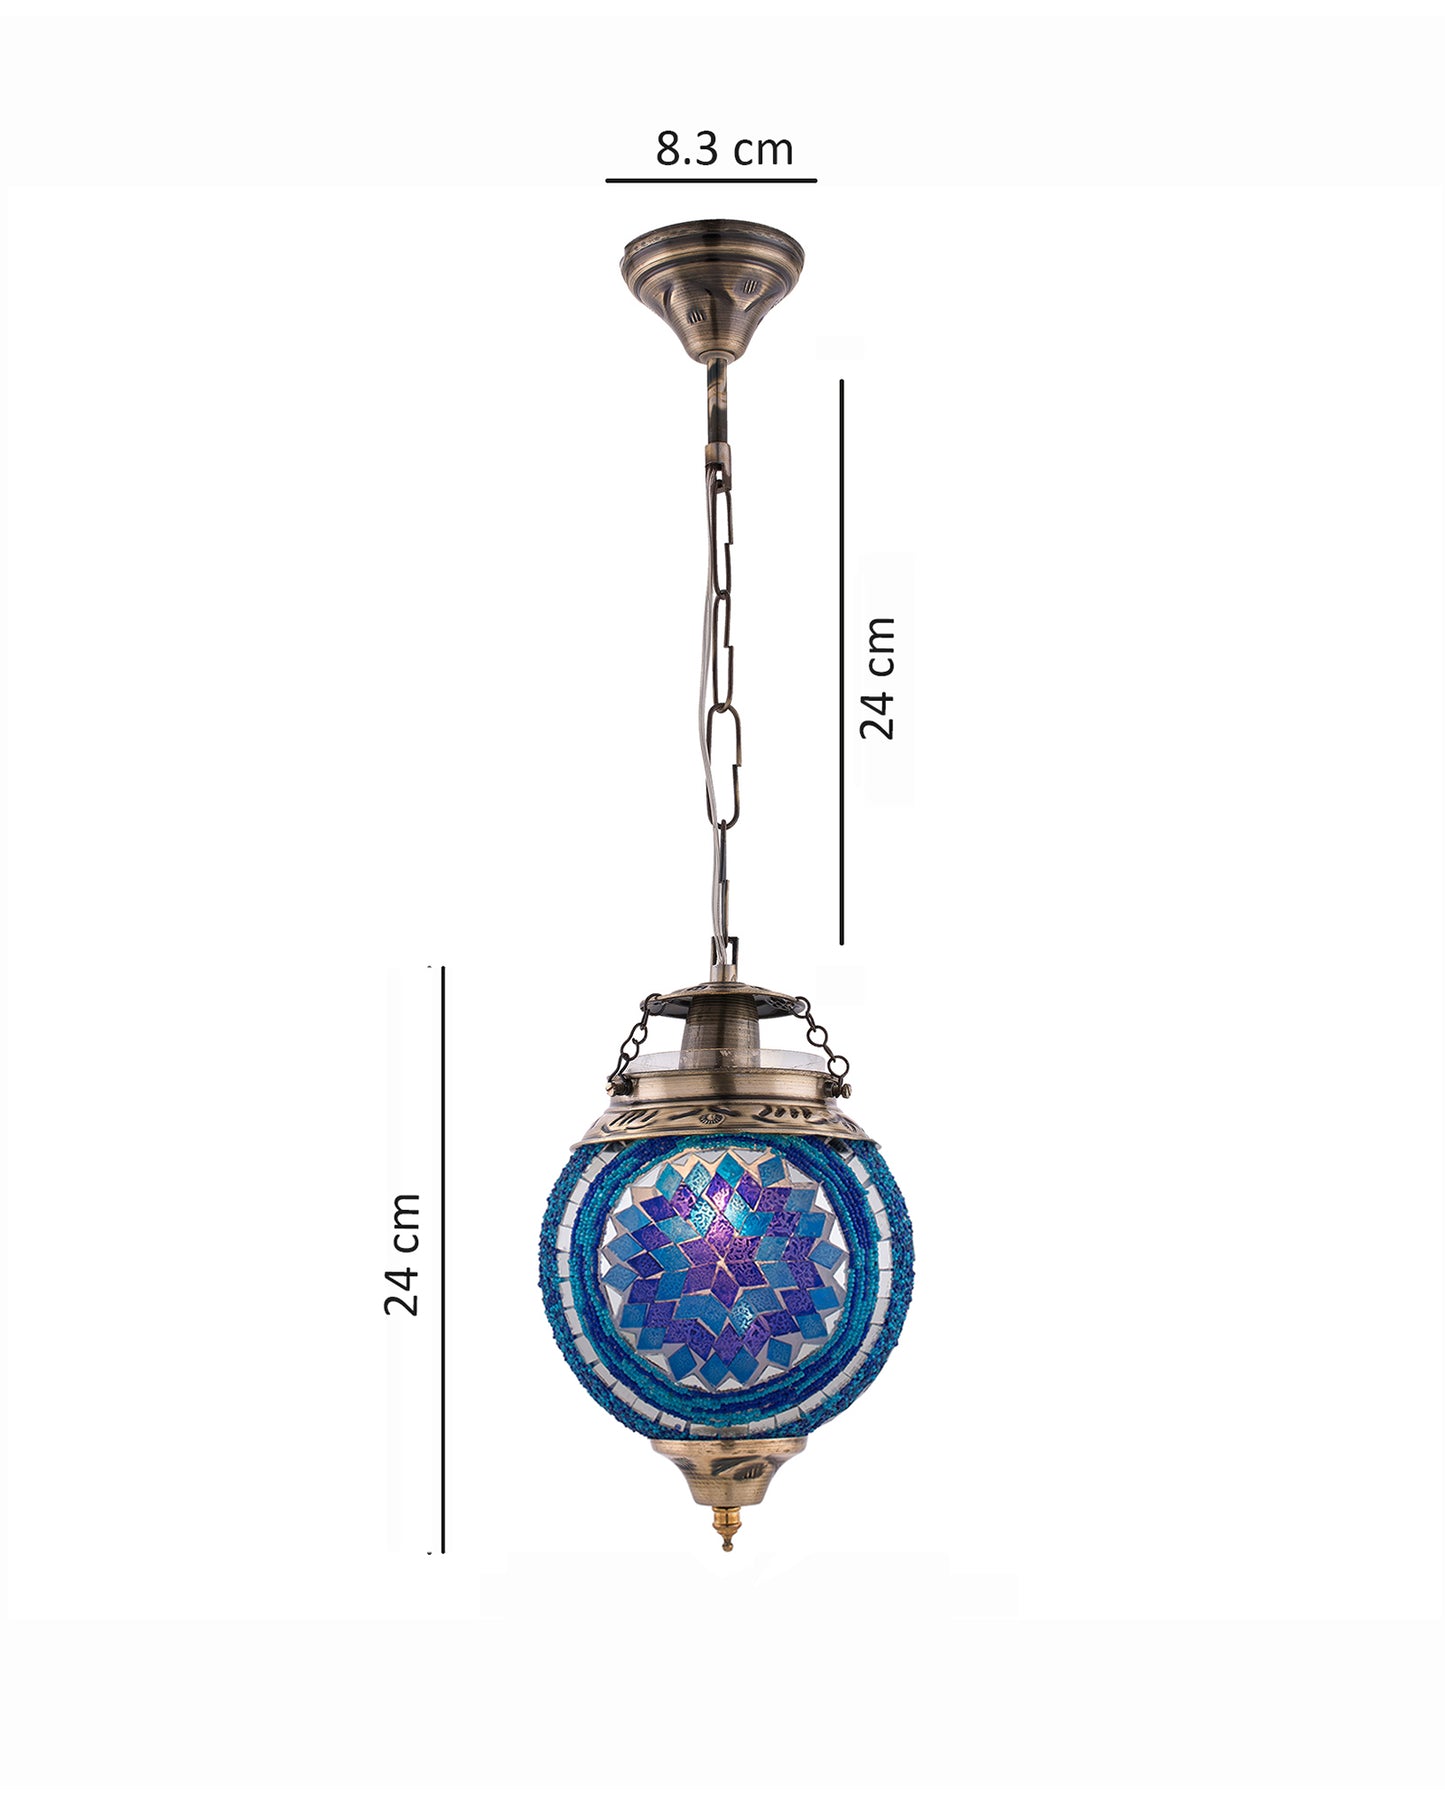 AntiqueTurkish Moroccan Mosaic Pendant with Metal hangings, Ceiling Hanging Light